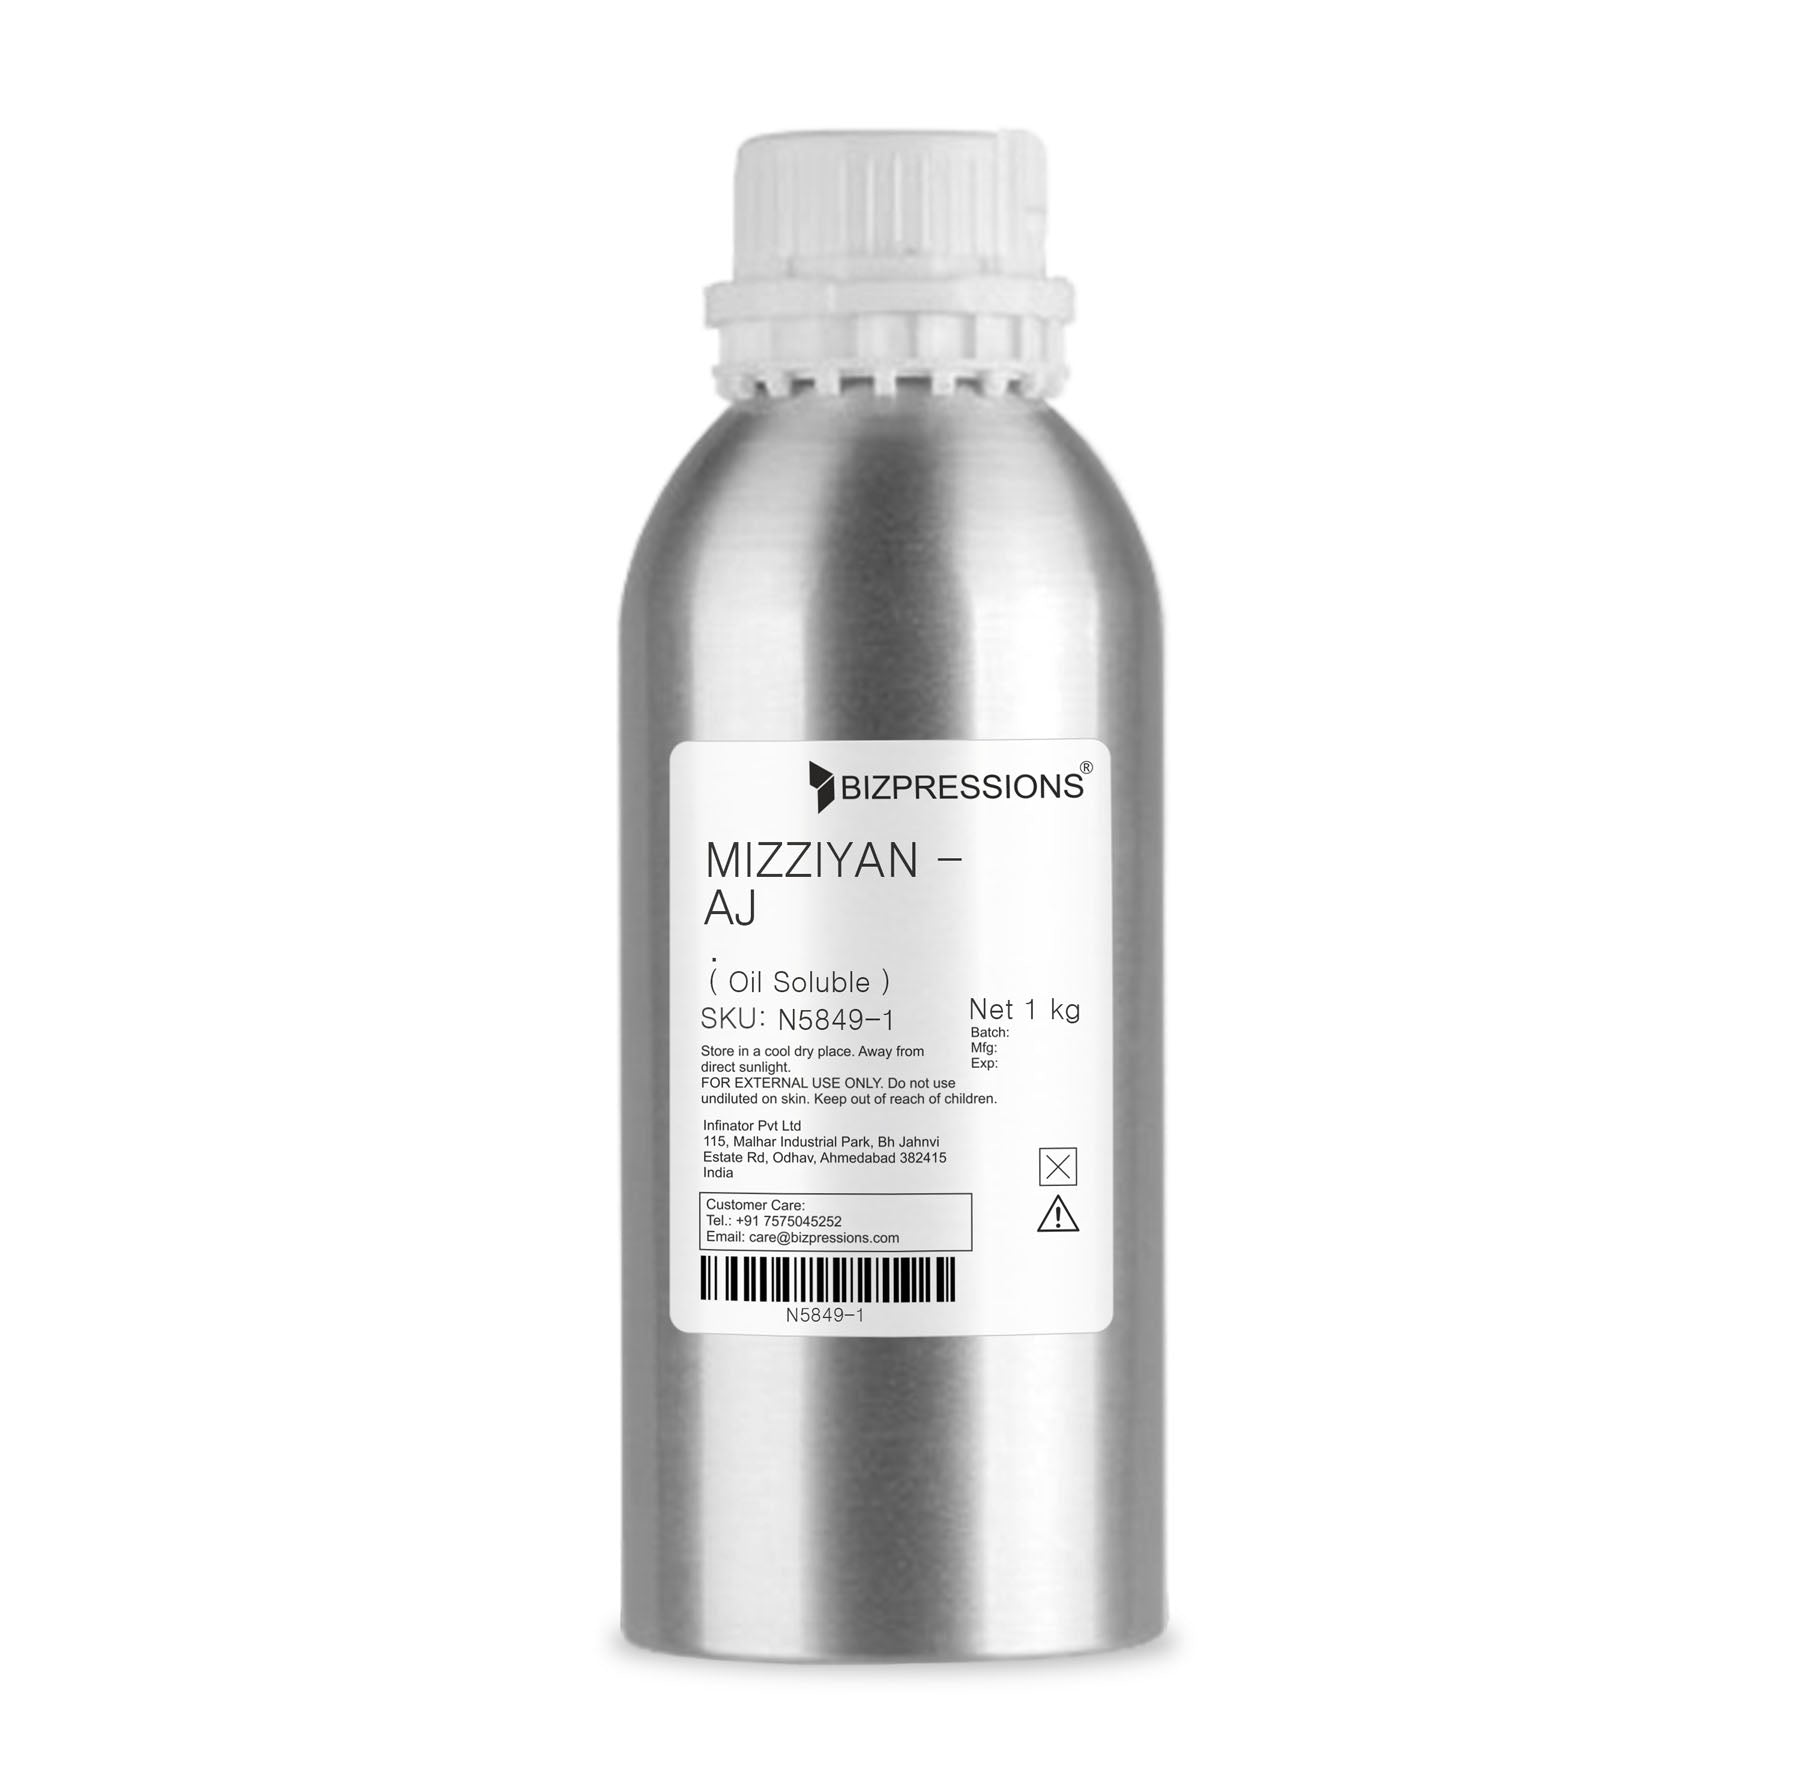 MIZZIYAN - AJ - Fragrance ( Oil Soluble ) - 1 kg